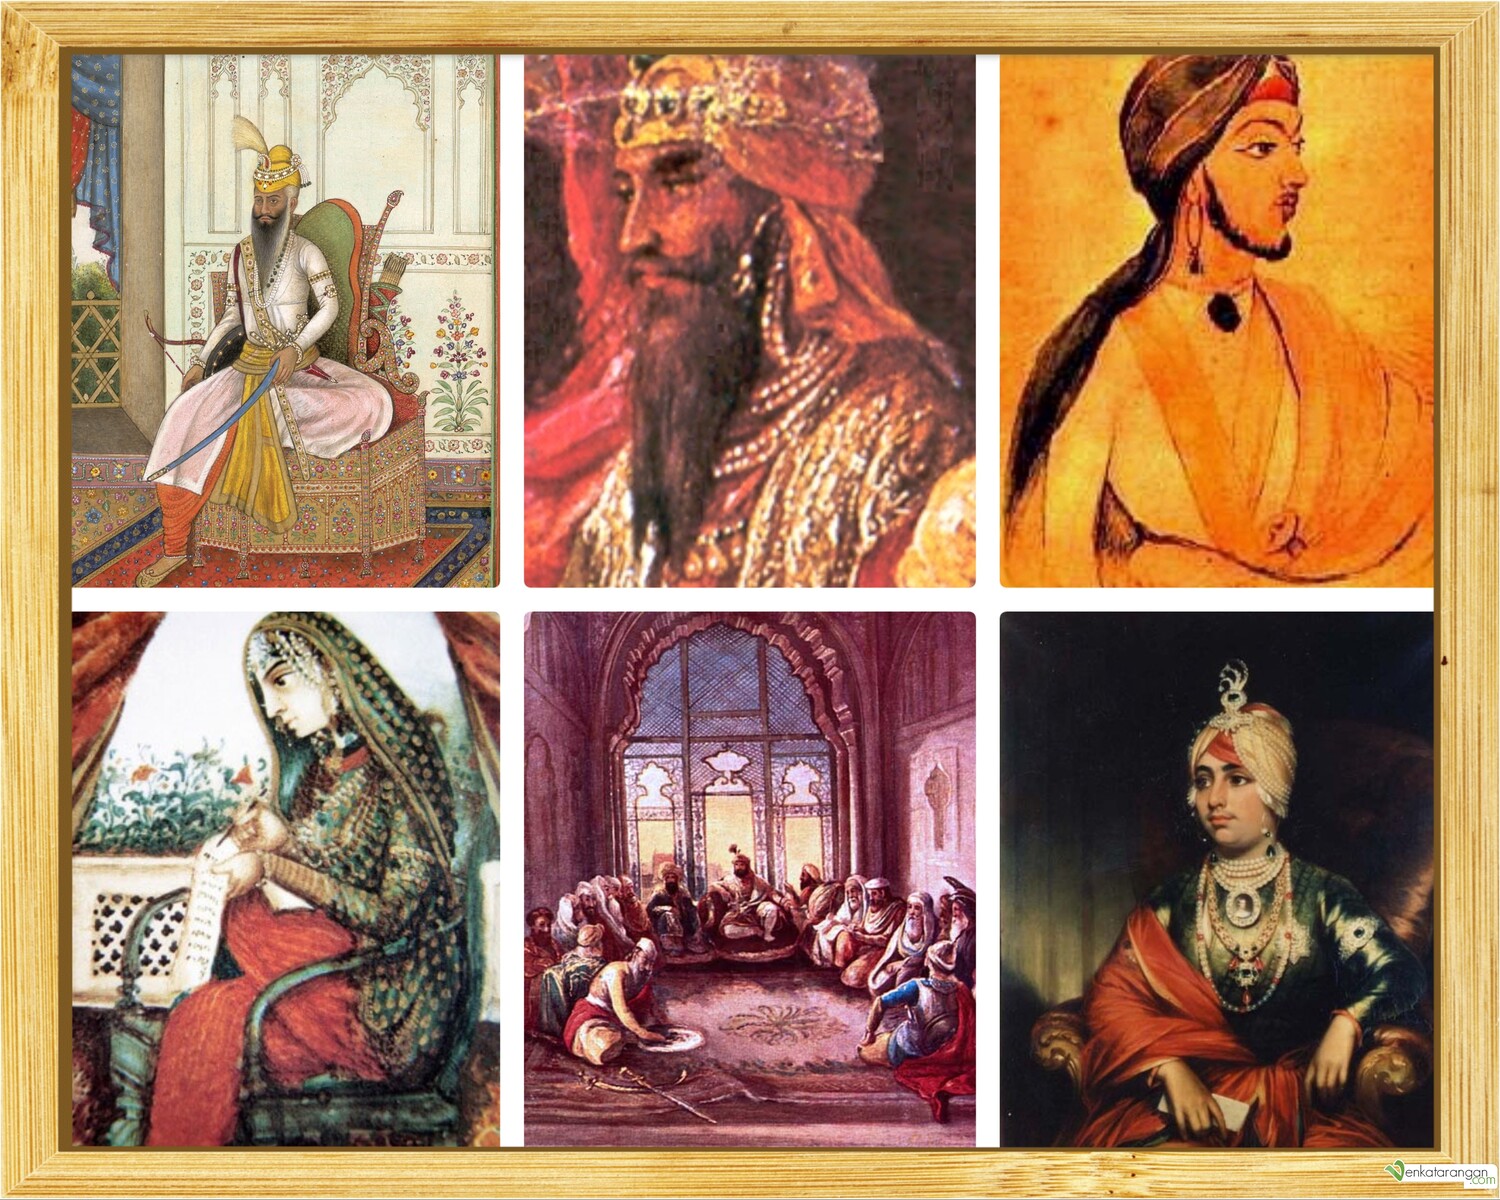 (Clockwise from the top-left) Maharaja Ranjit Singh, Kharak Singh, Nau Nihal Singh, Chand Kaur, Sher Singh & Duleep Singh